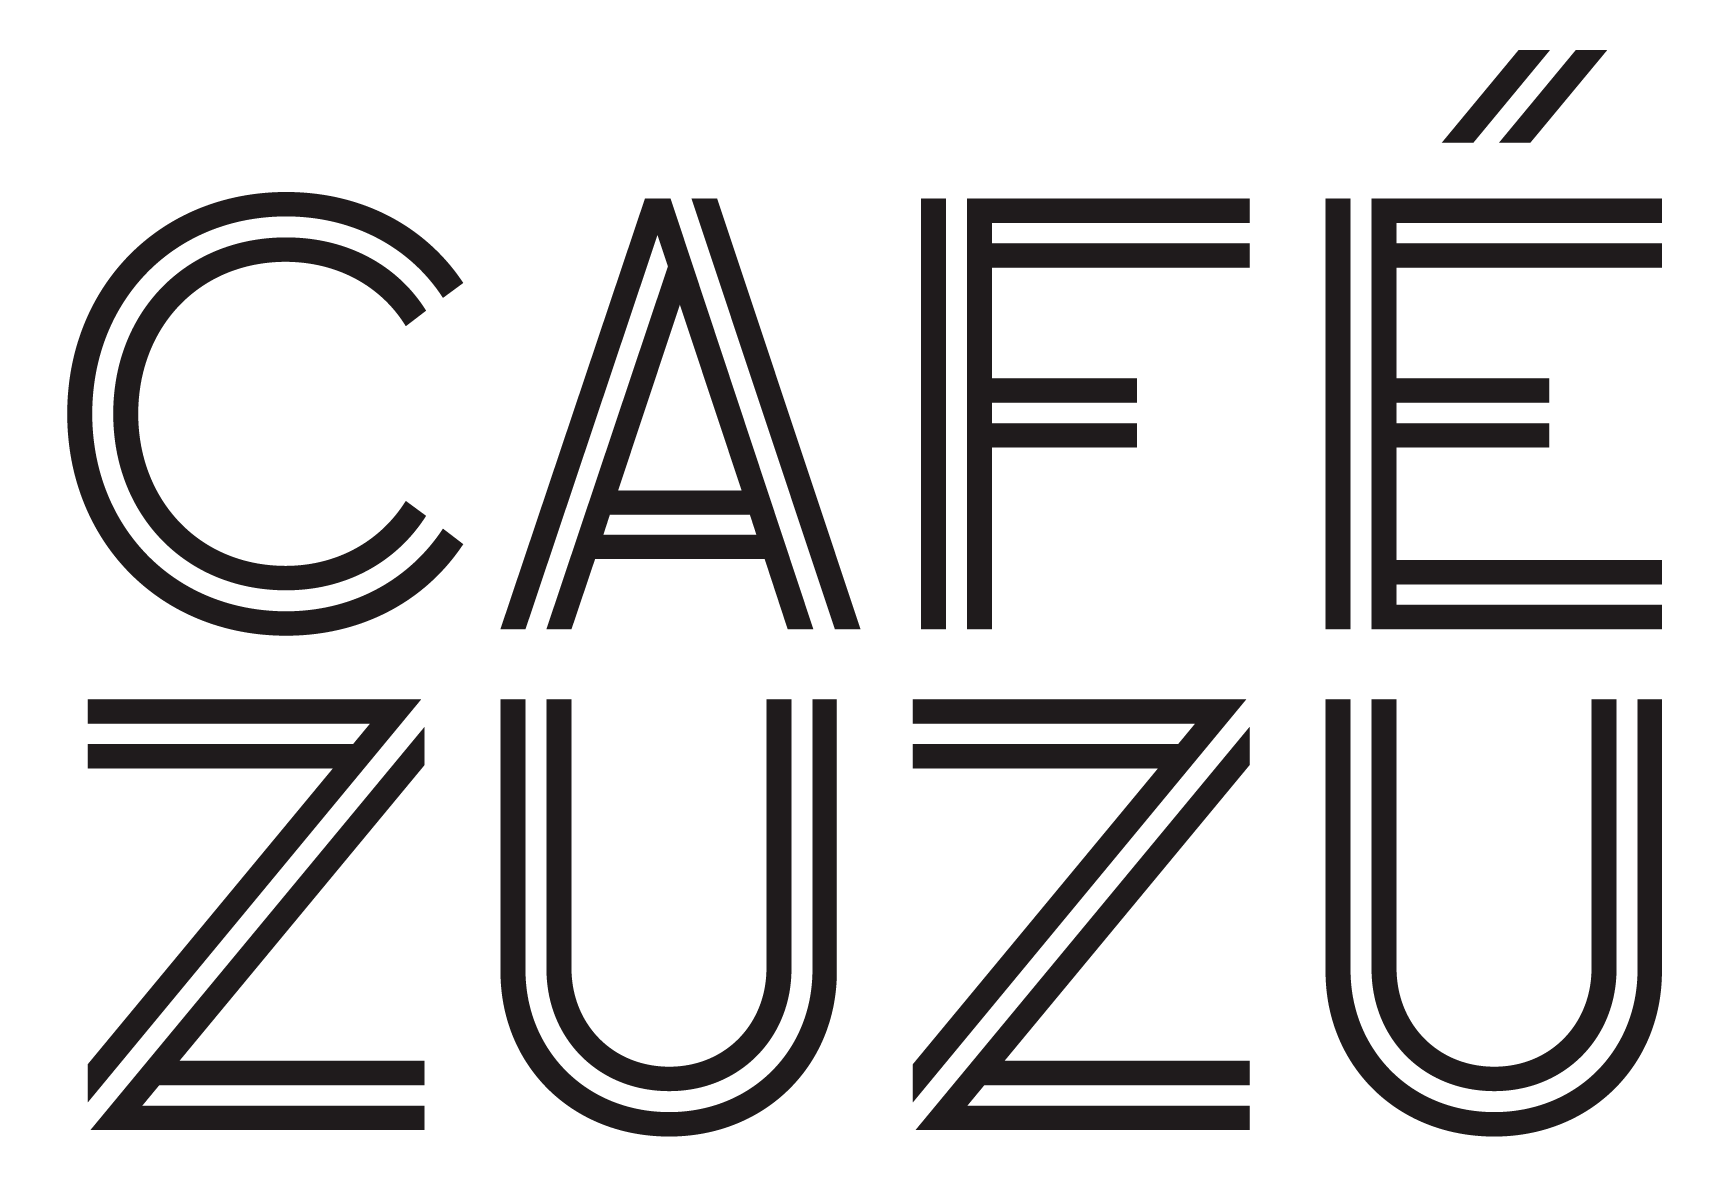 Cafe Zuzu